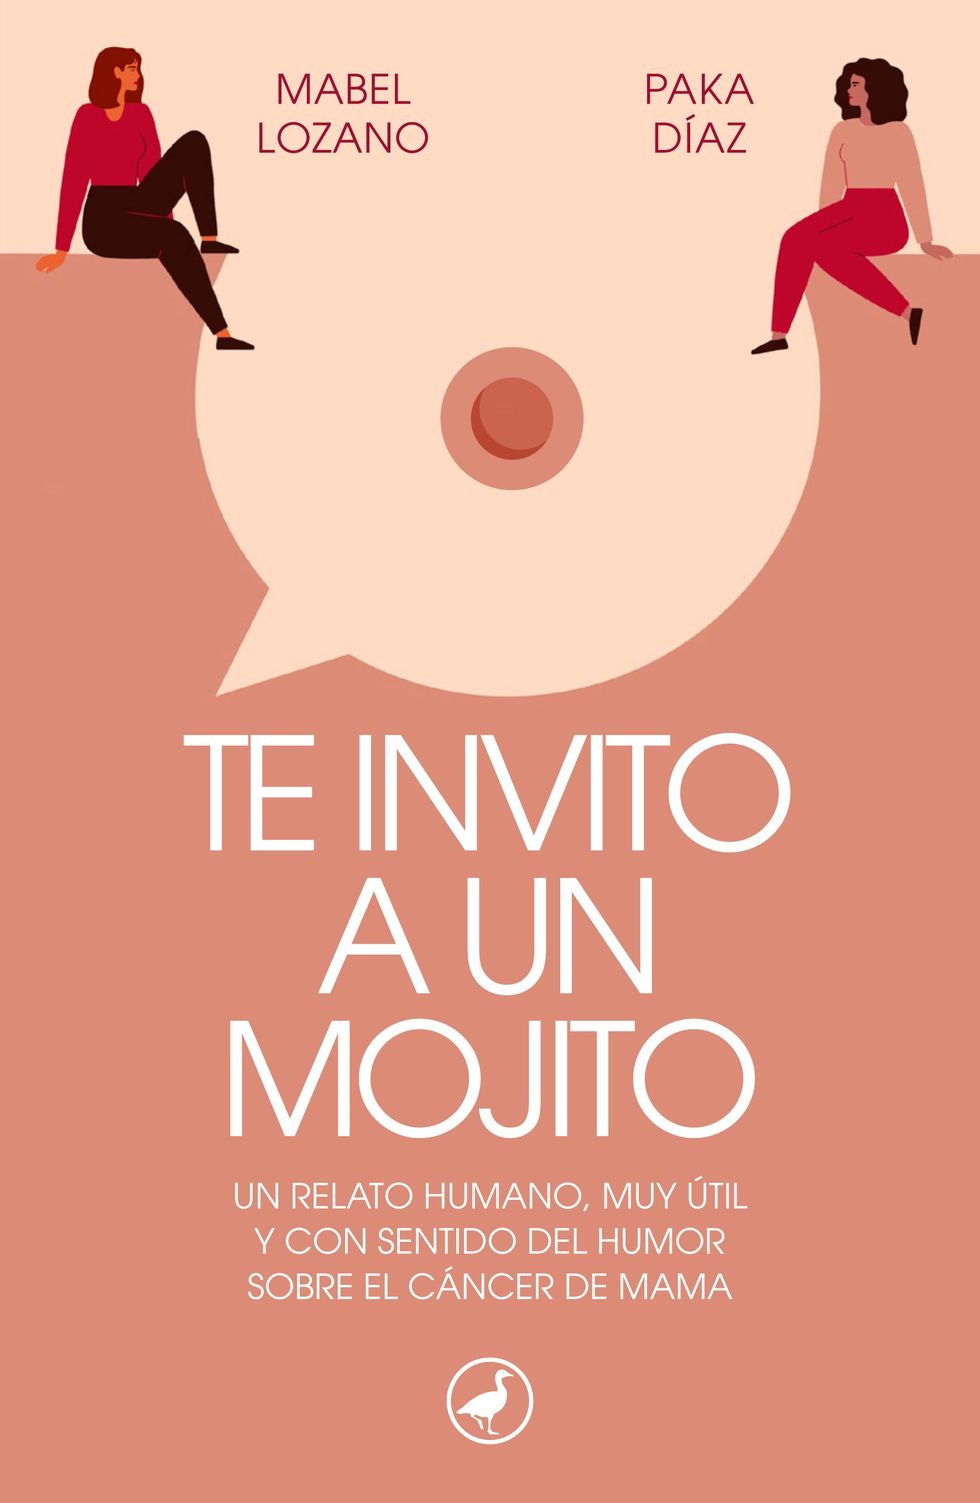 Te invito a un mojito, de Mabel Lozano y Paka Díaz